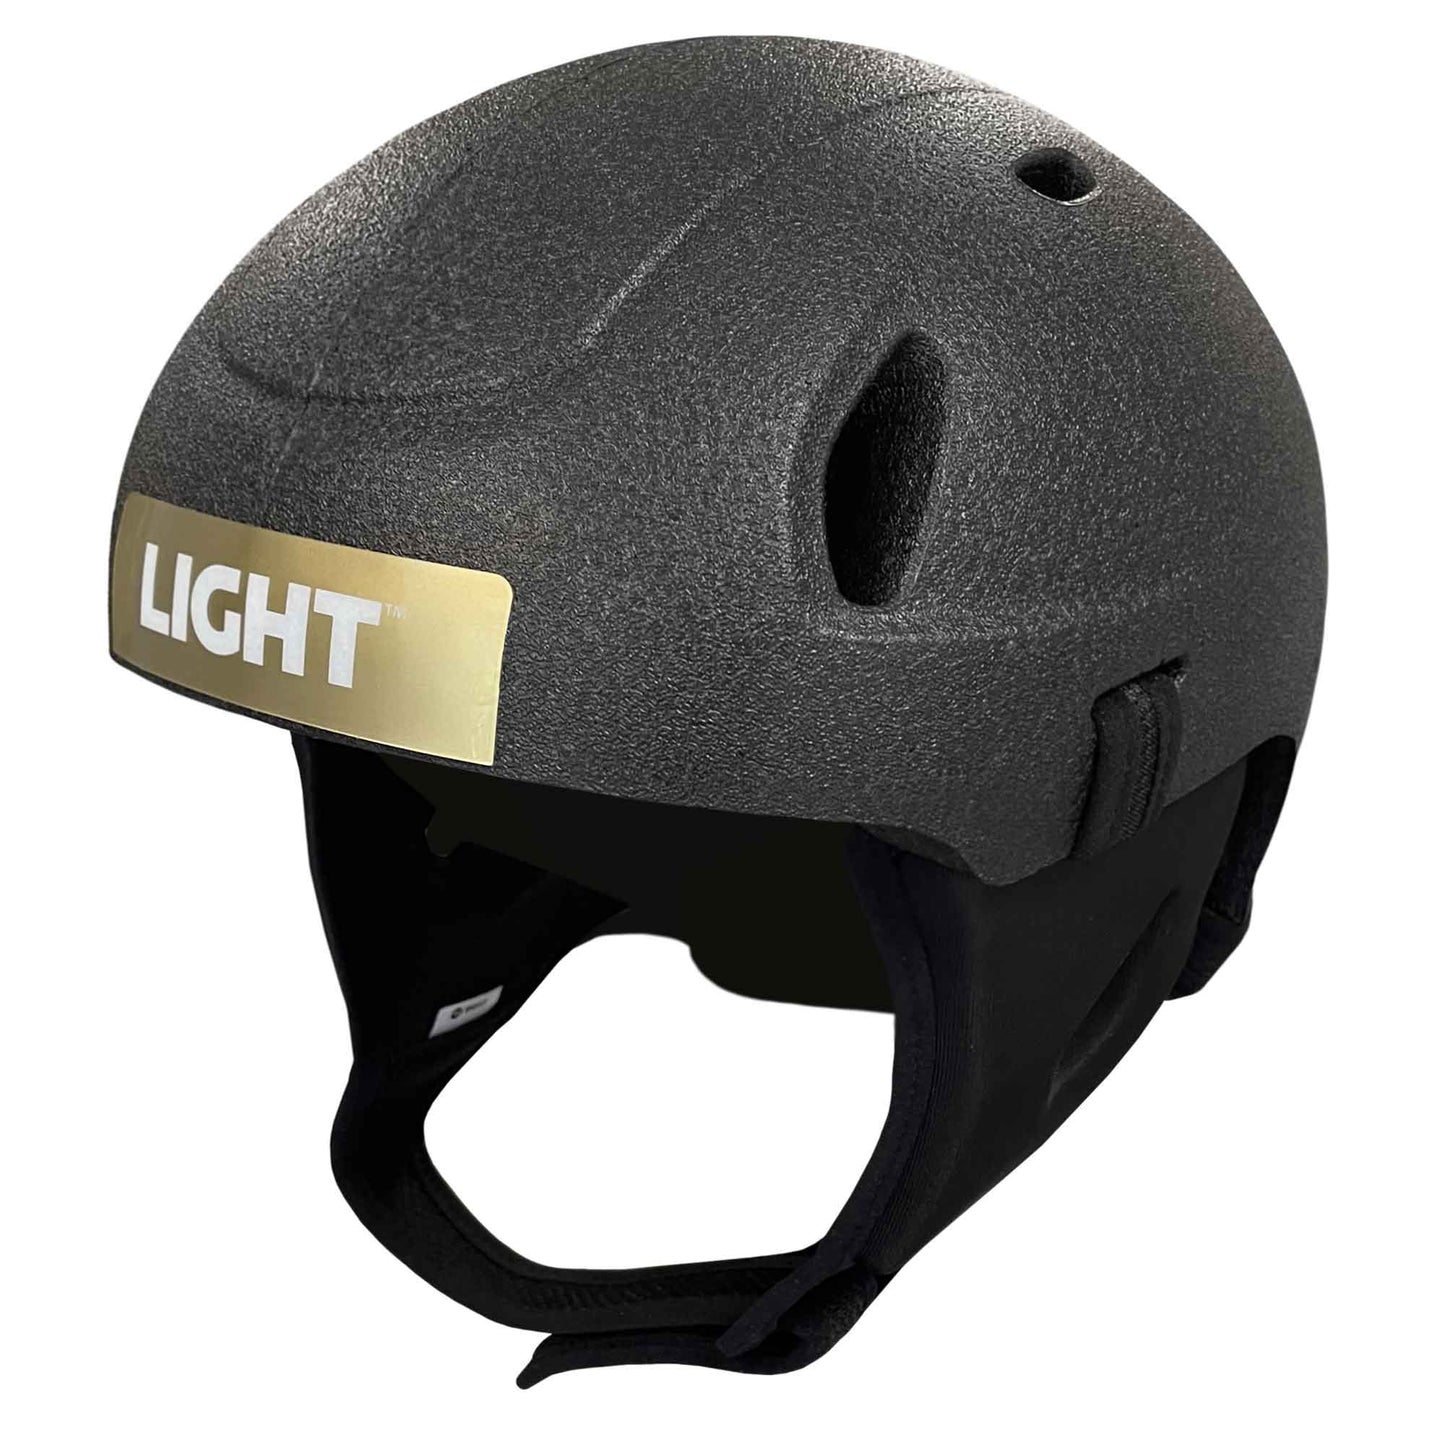 SS1 Soft Shell Helmet Side Front View Light Helmets